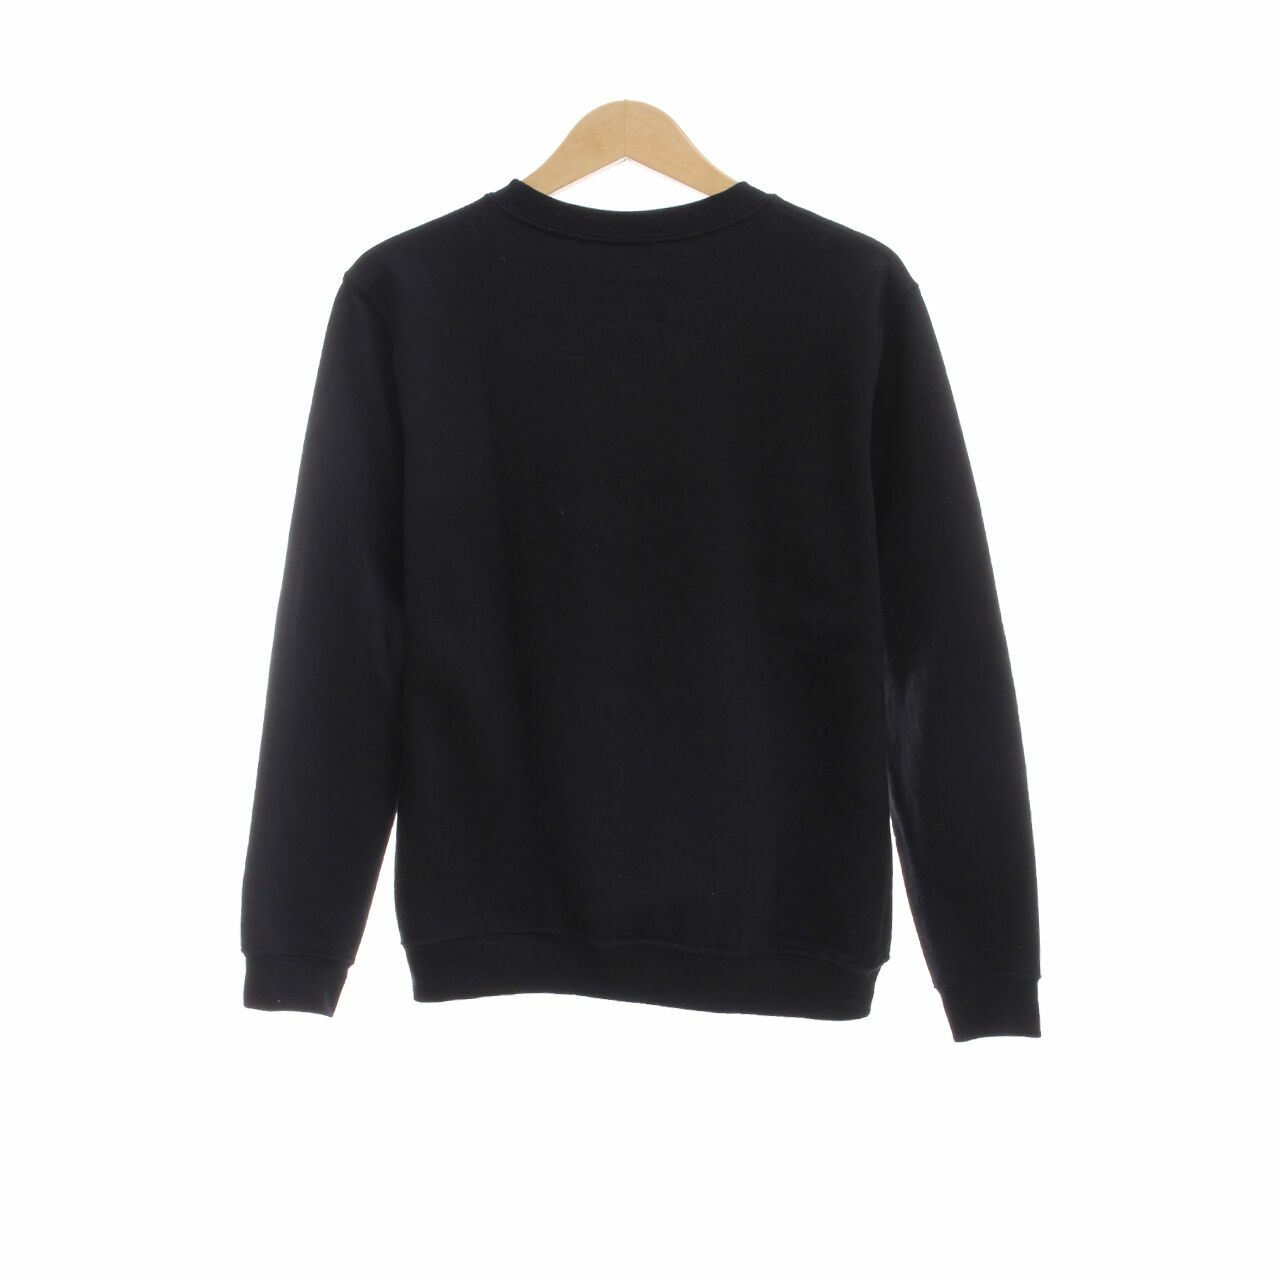 STELLARMADE Black Sweater